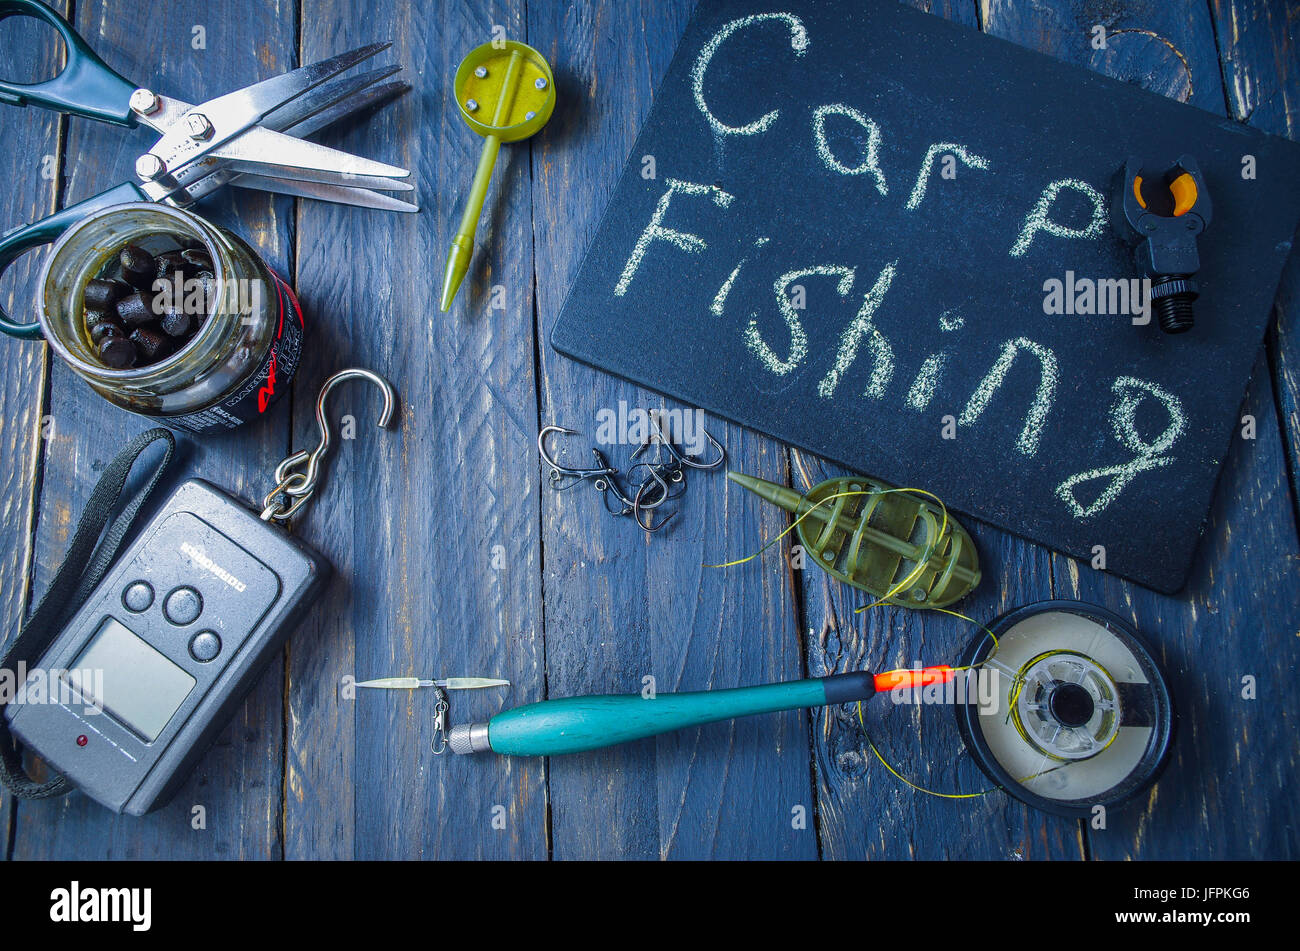 https://c8.alamy.com/comp/JFPKG6/the-plate-with-the-inscription-carp-fishing-fishery-composition-JFPKG6.jpg